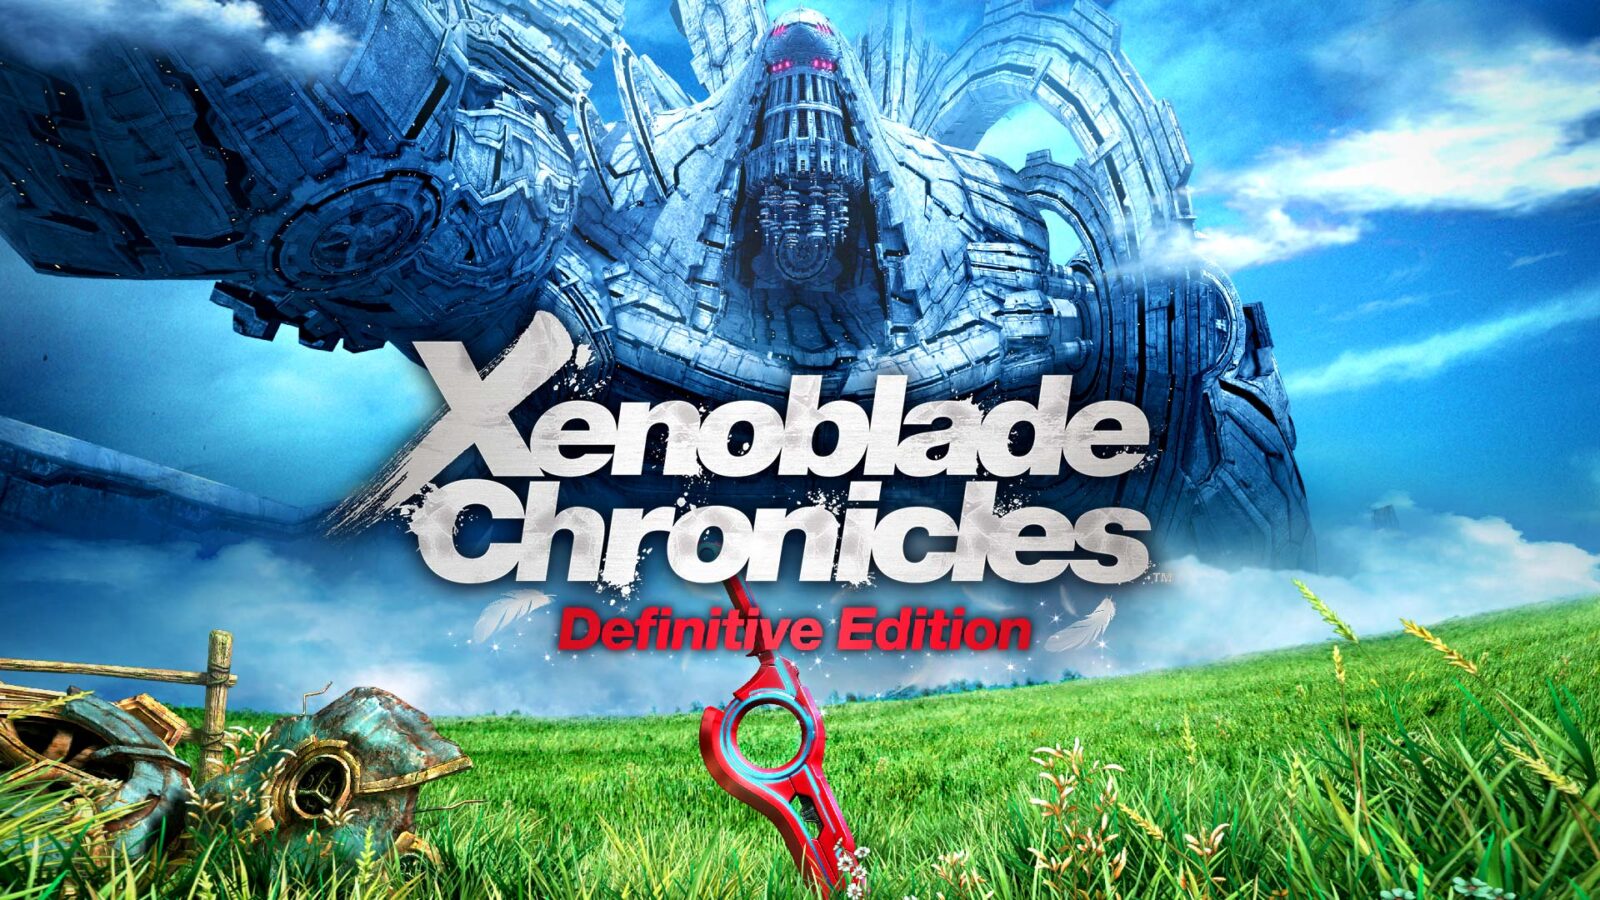 Konten Cerita Baru Xenoblade Chronicles: Definitive Edition Akan Langsung Tersedia